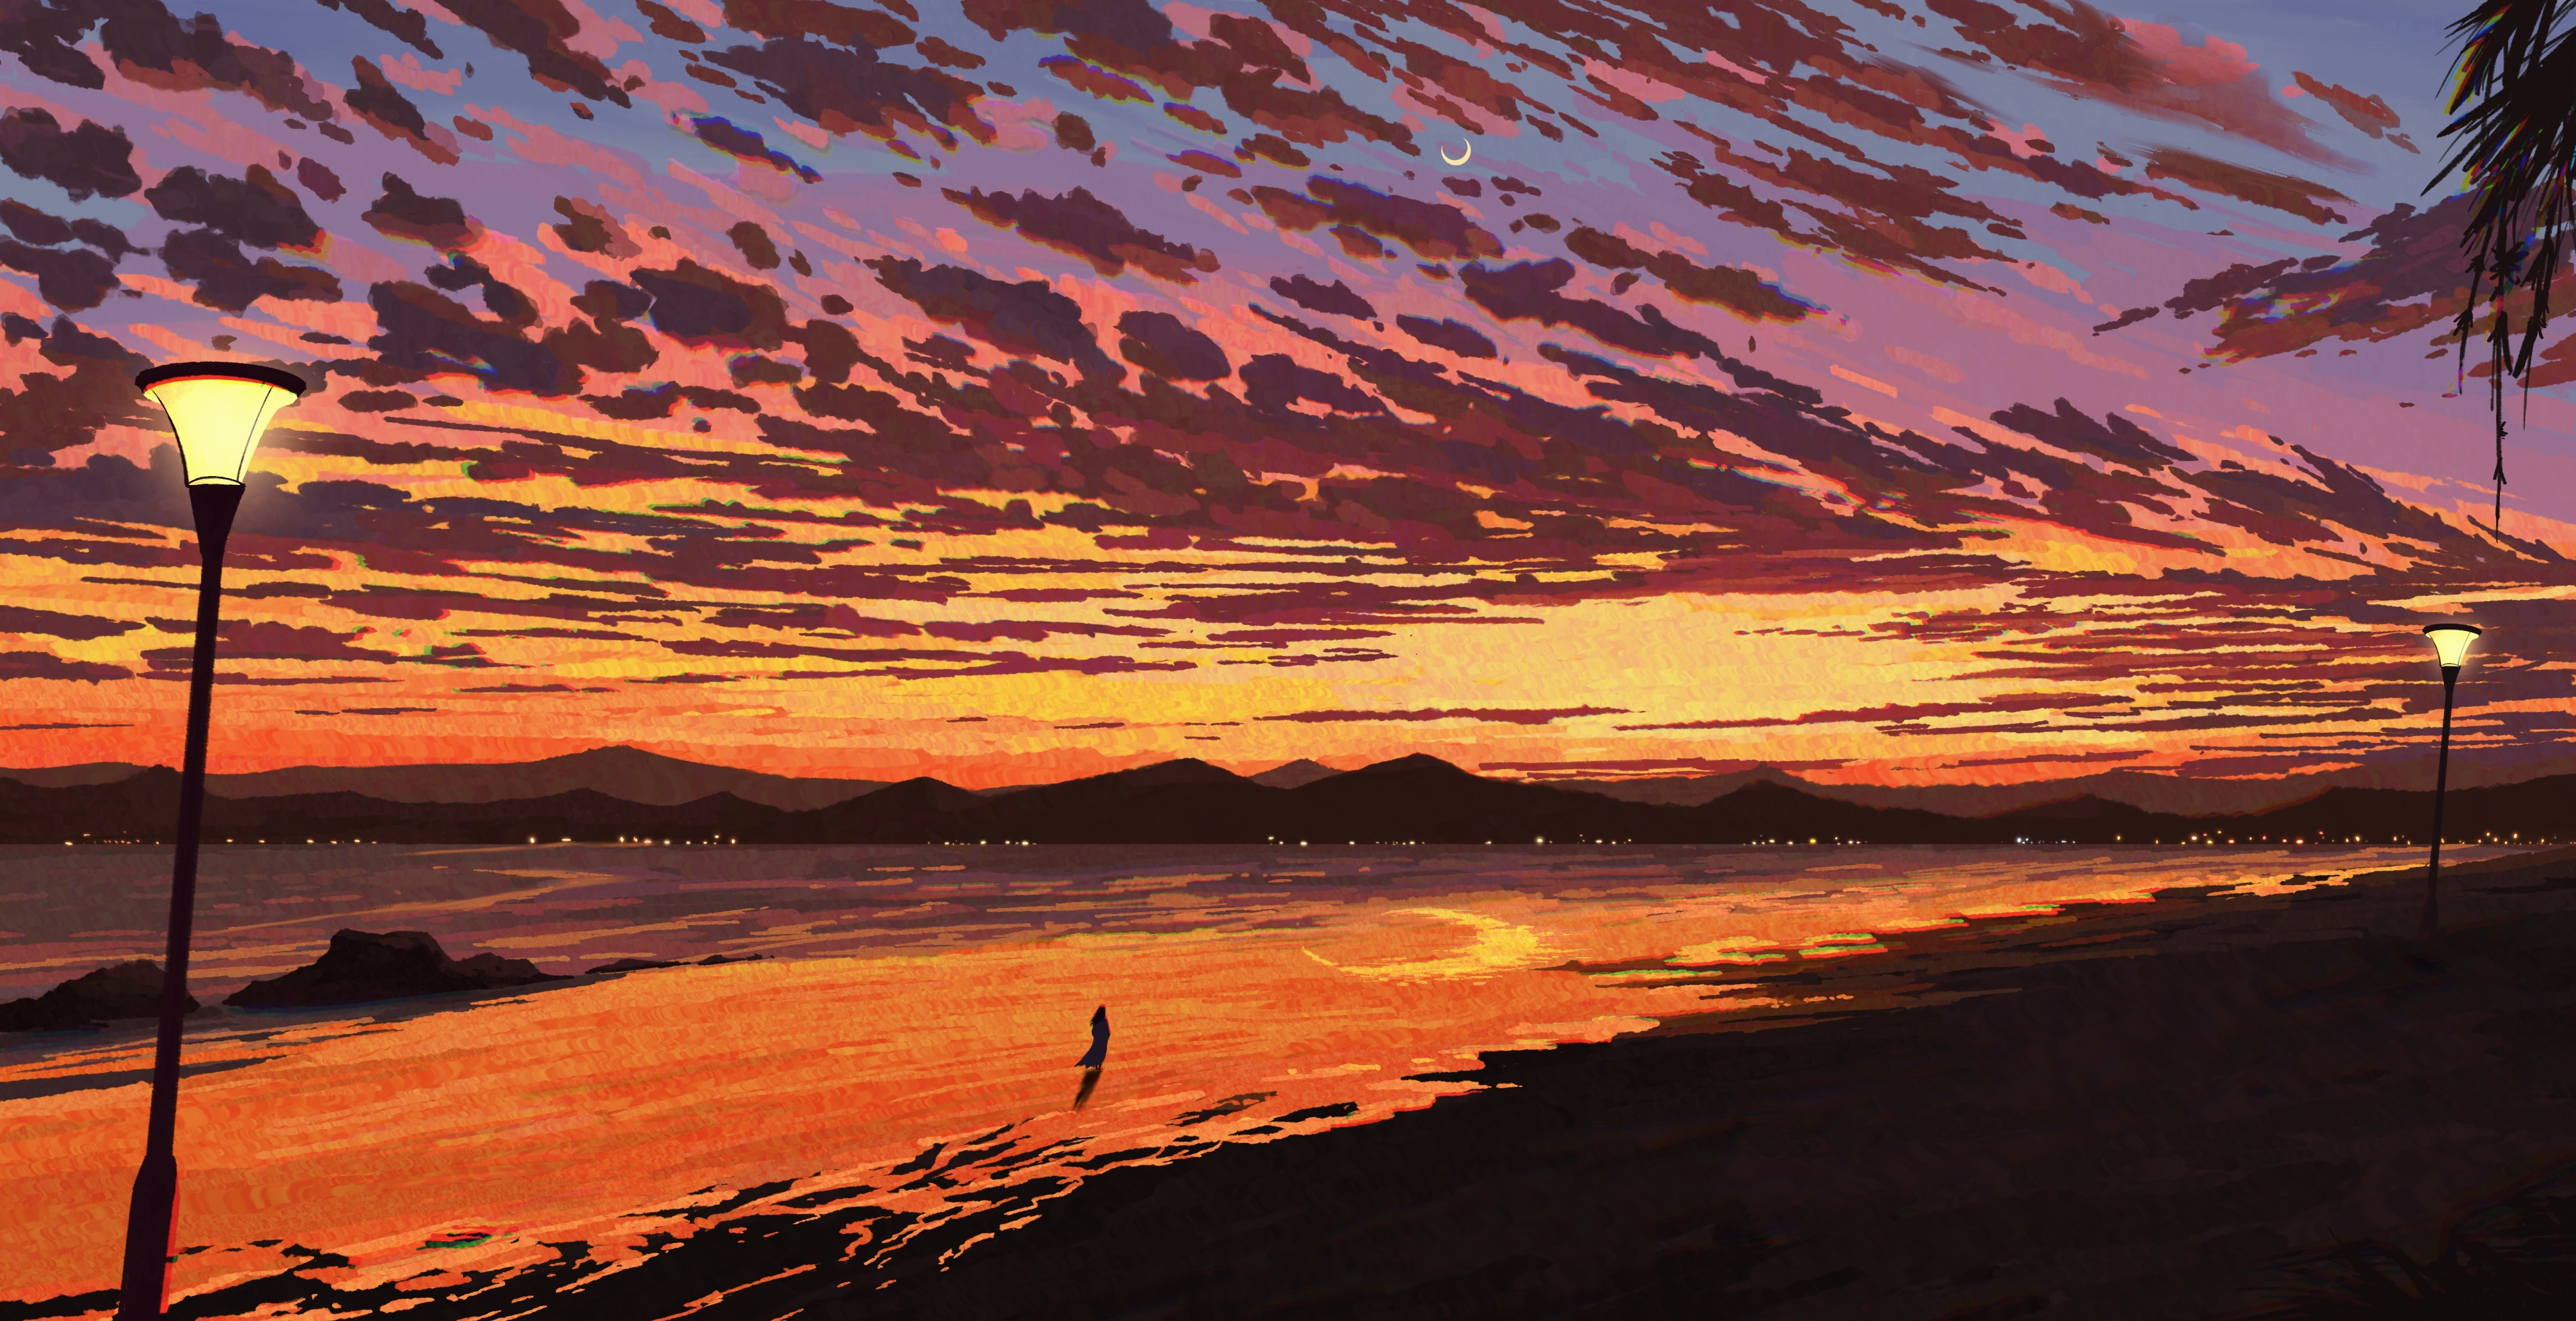 Fangpeii Digital Art Artwork Illustration Landscape Sunset Sea Beach Mountains Clouds Street Light E 3995x2048